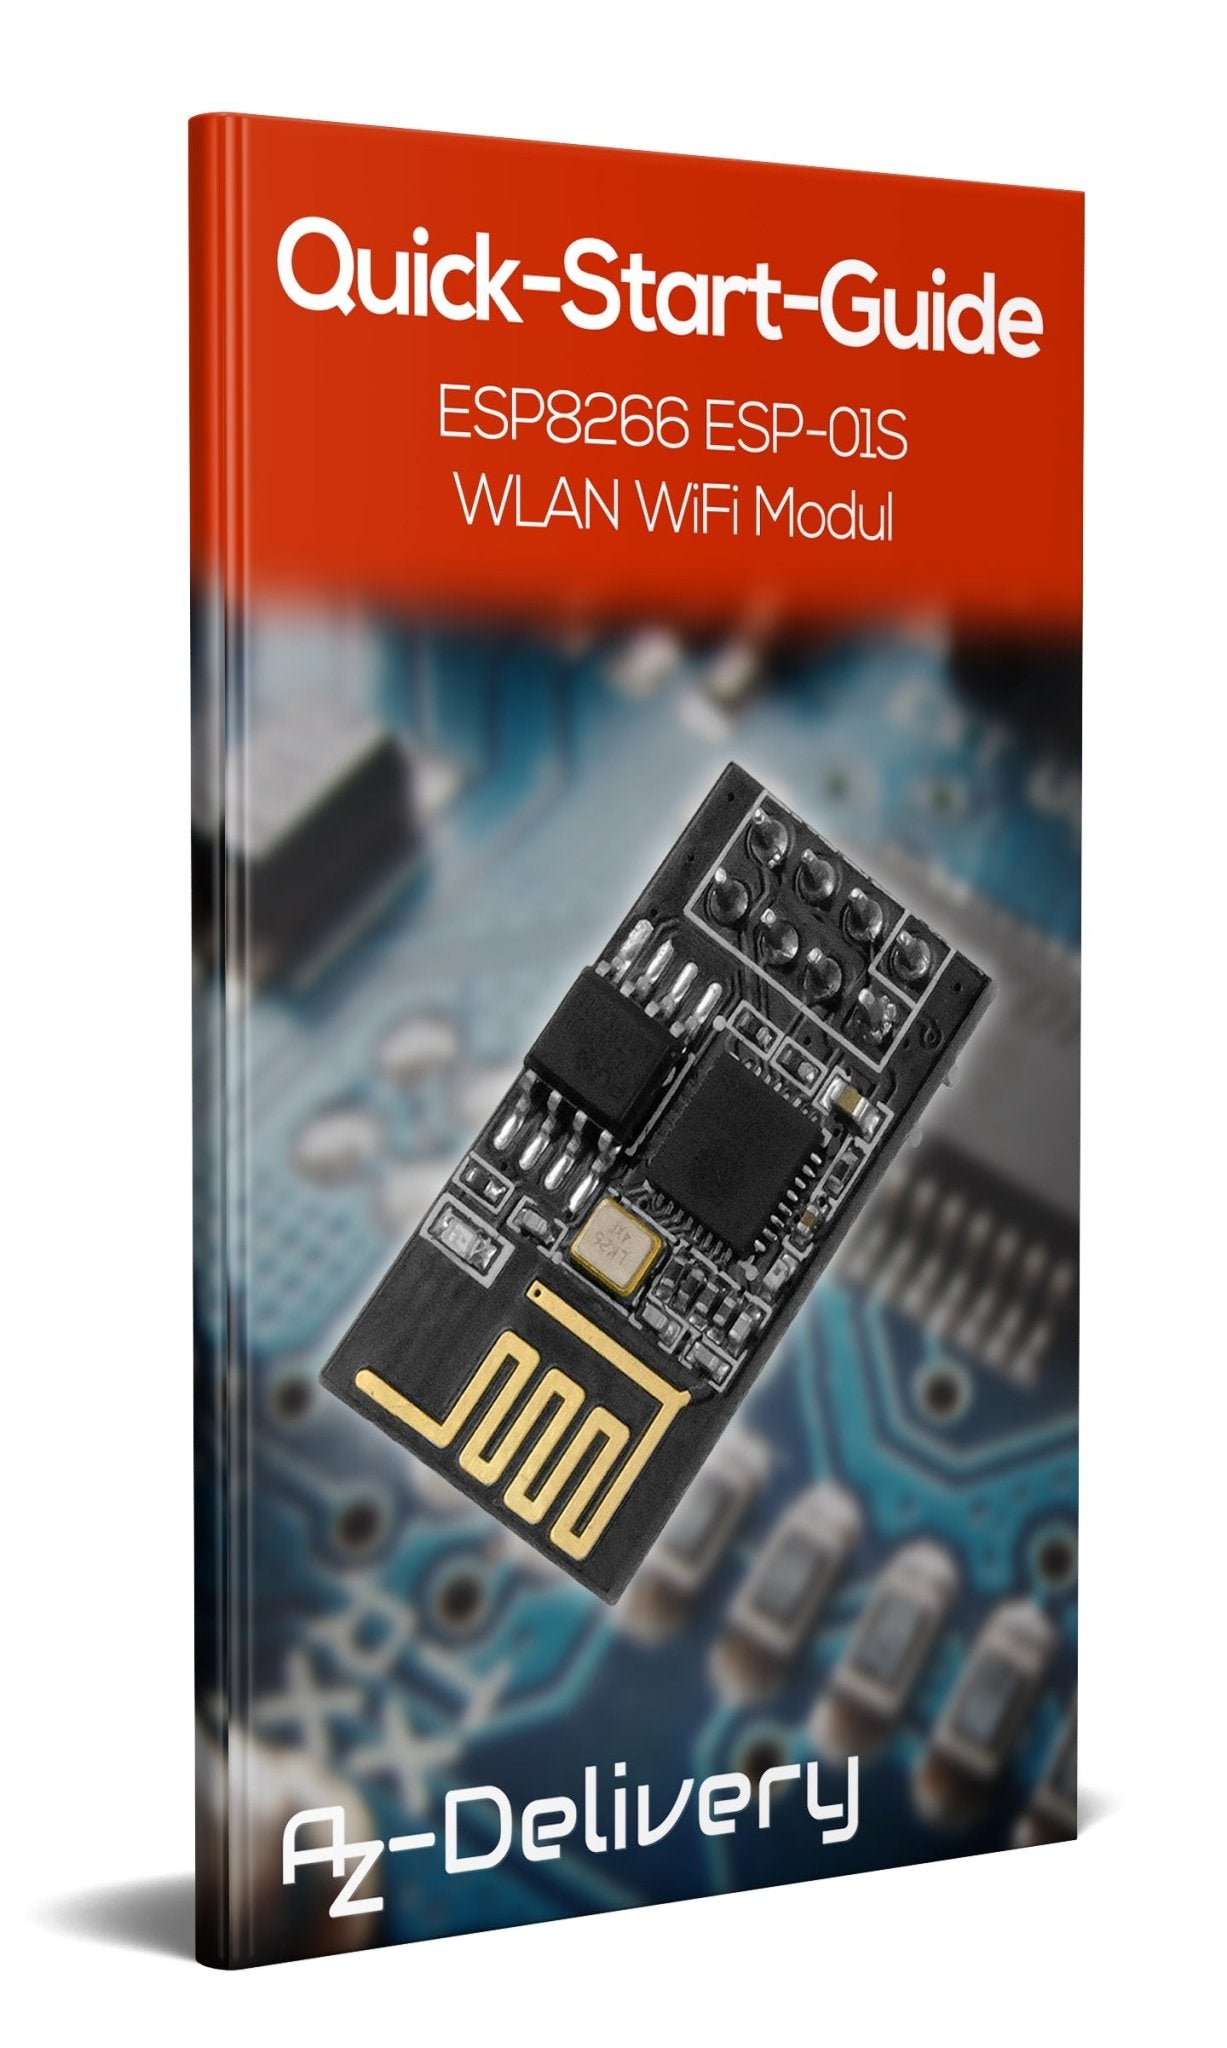 ESP8266 ESP-01S WLAN WiFi Modul für Raspberry Pi - AZ-Delivery